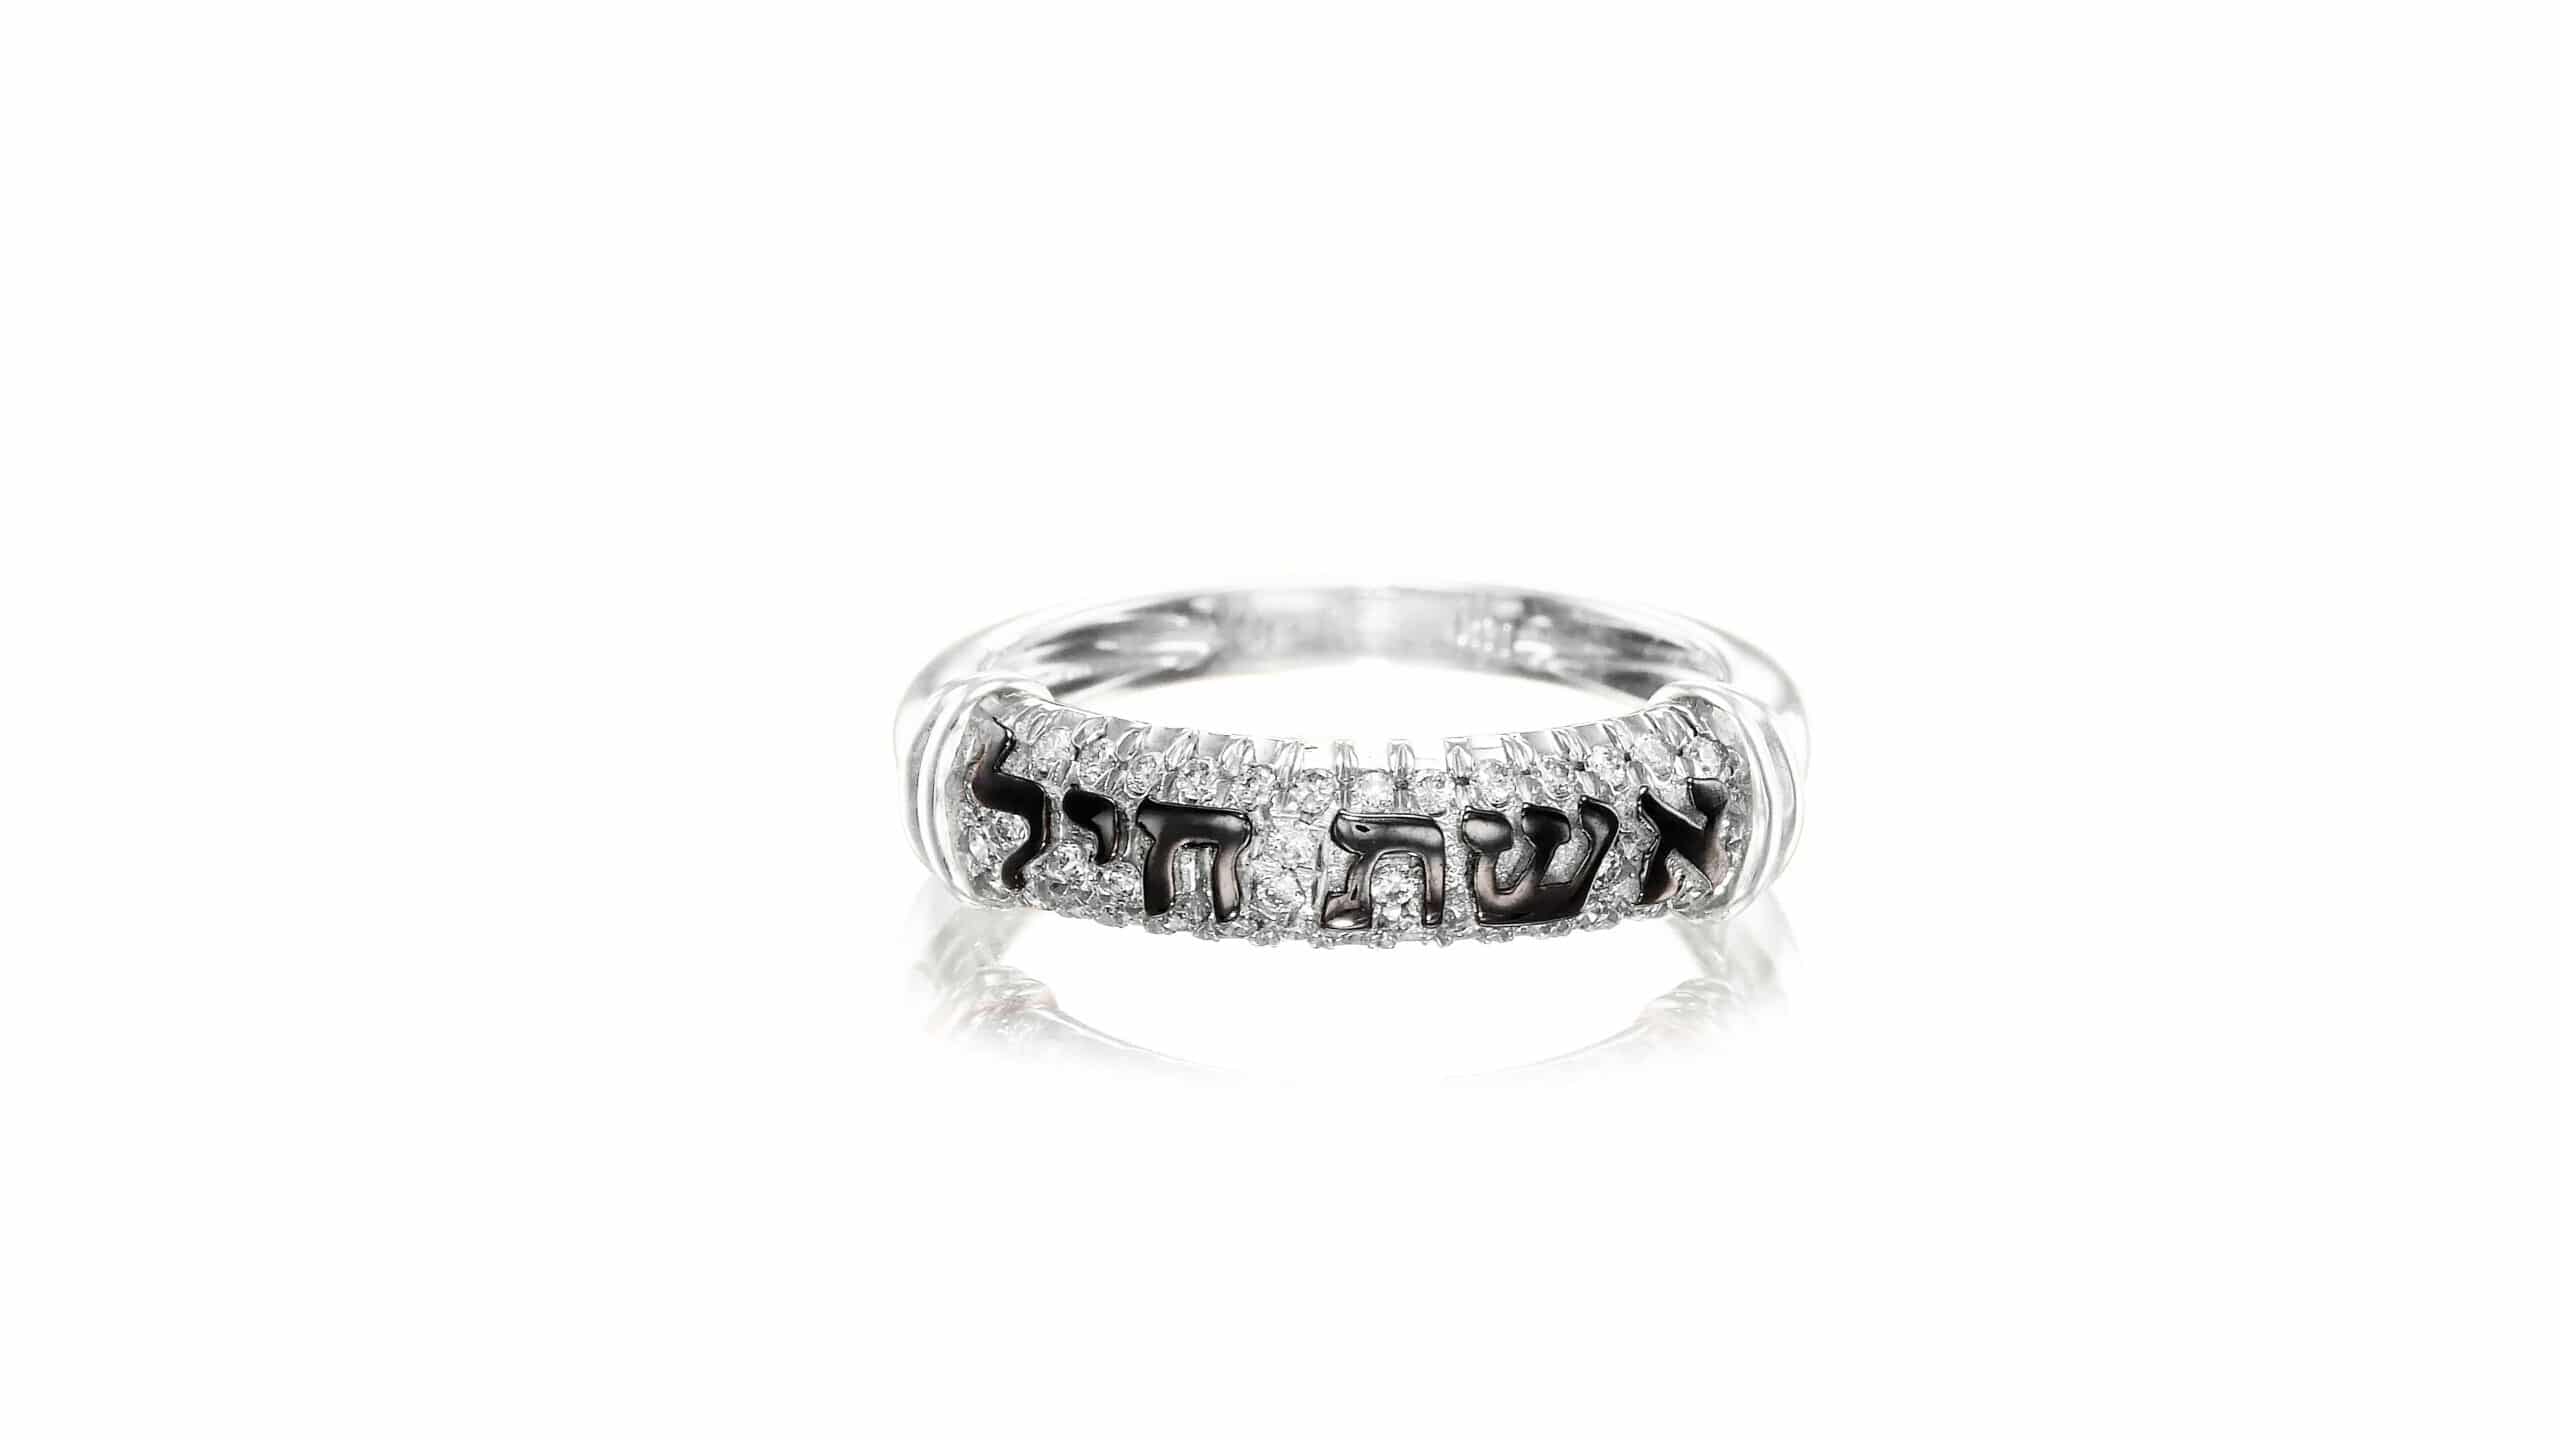 Hebrew Ring Diamond Ring 14K Gold